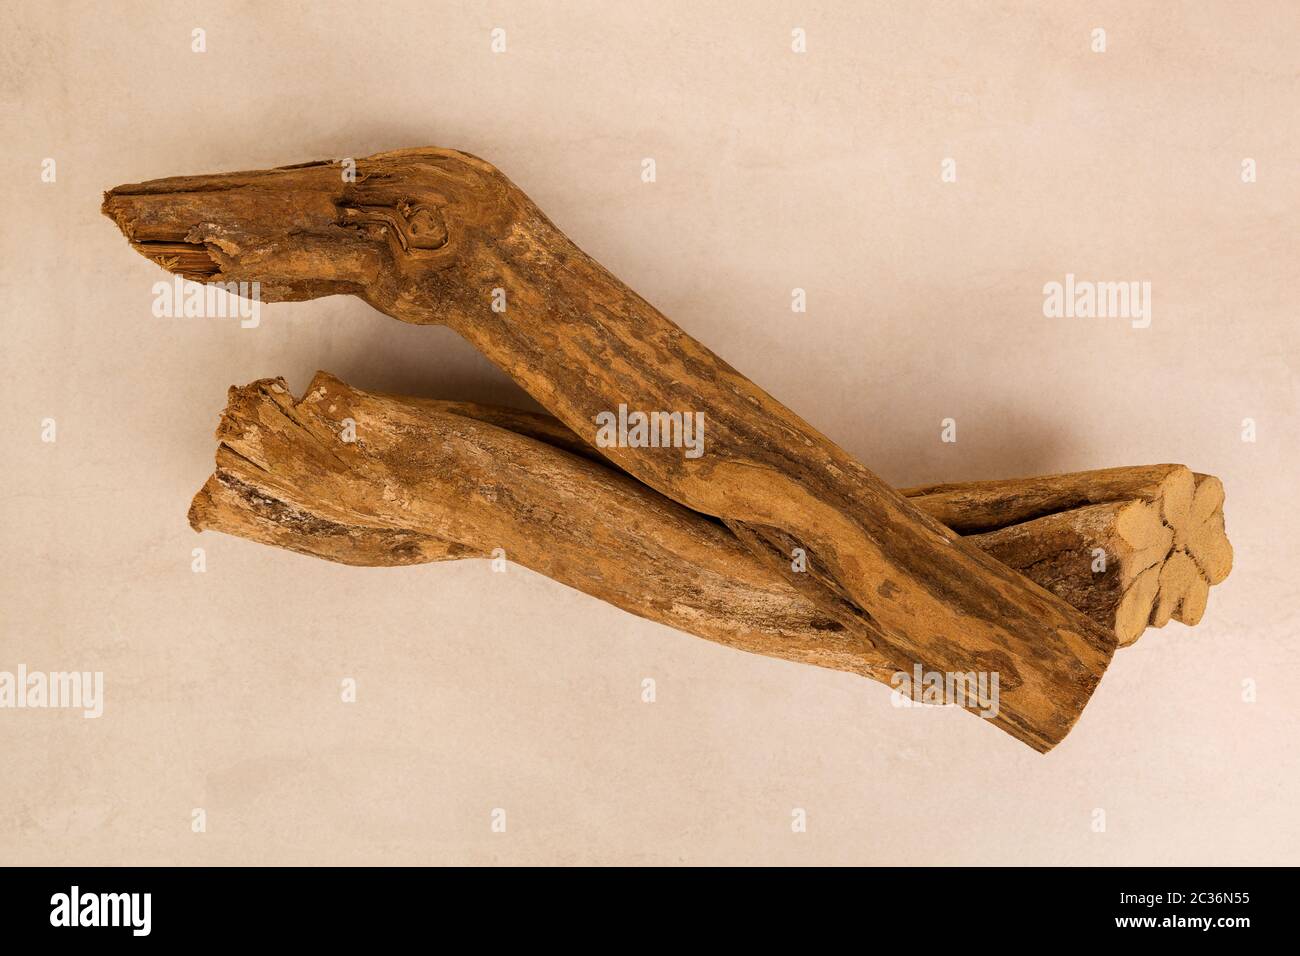 Banisteriopsis caapi legno, tradizionale medicina visionario Ayahuasca. Foto Stock